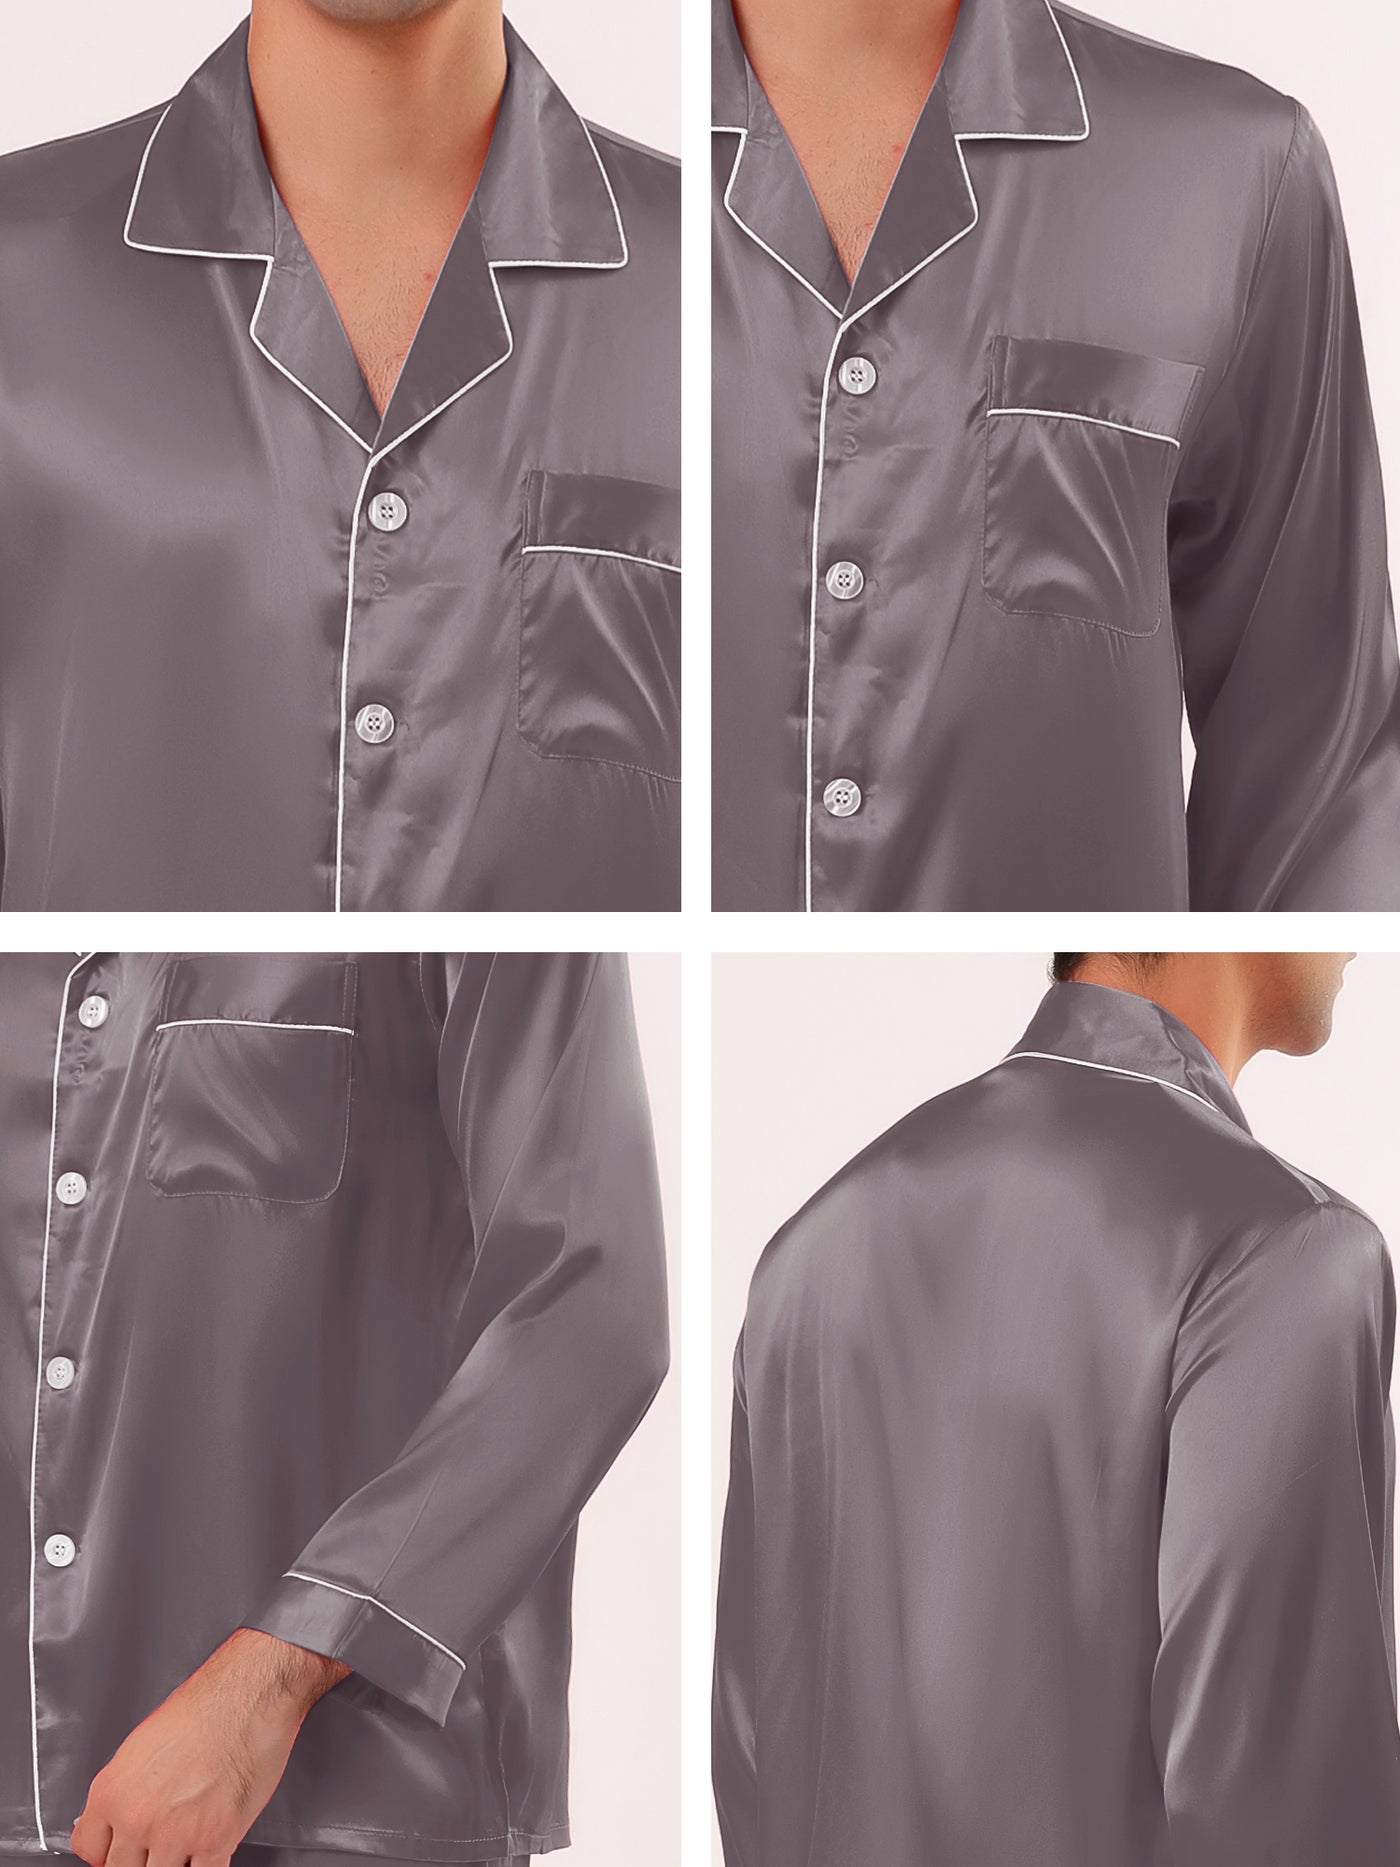 Bublédon Satin Color V Neck Button Long Sleeve Pajama Sets